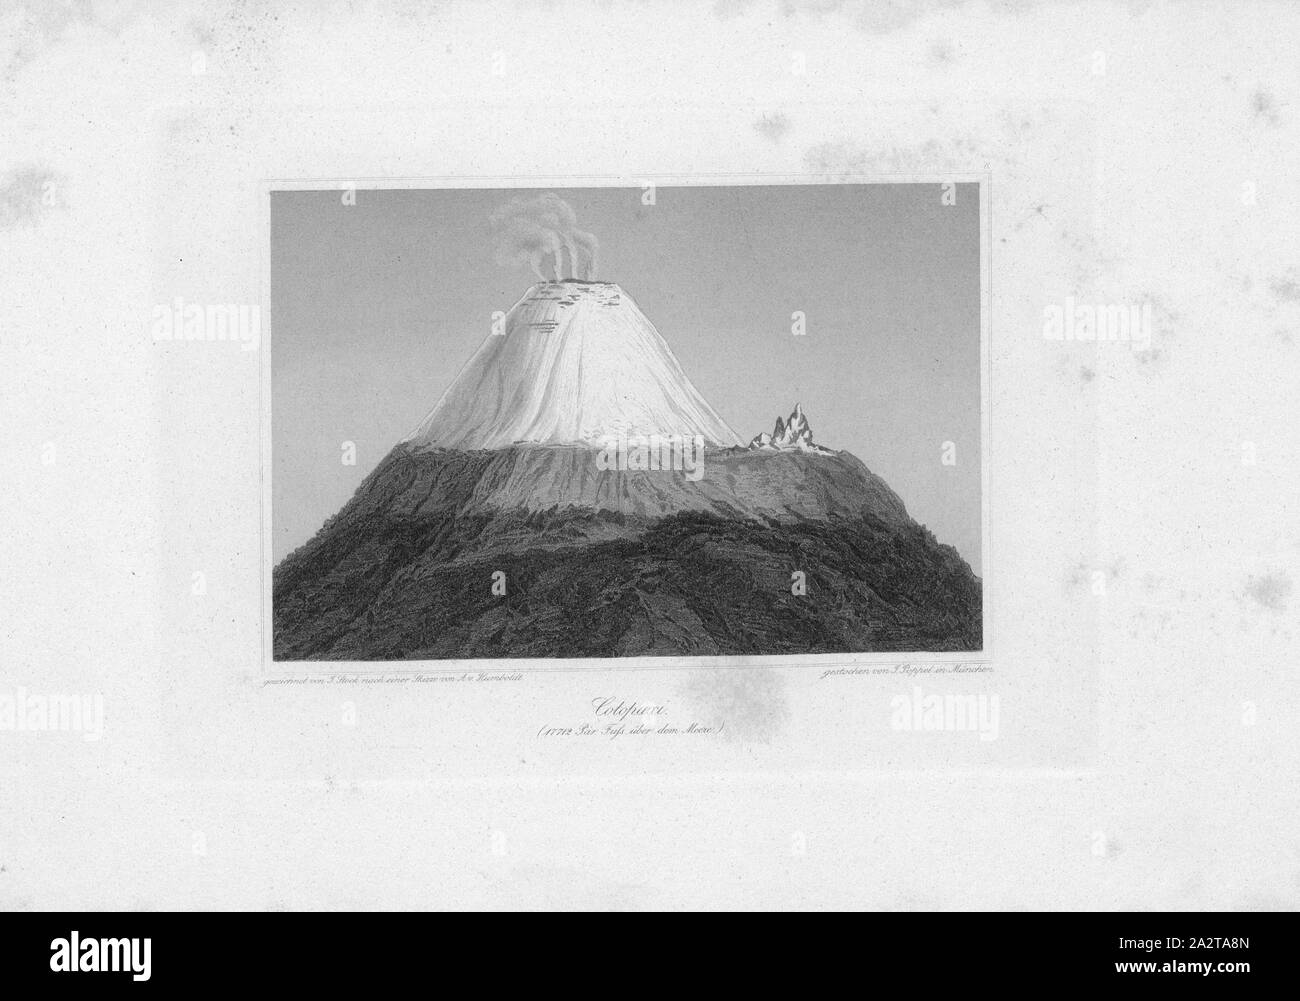 Cotopaxi, illustrazione del vulcano Cotopaxi in Ecuador dal xix secolo, firmato: disegnato da J. Stock dopo un bozzetto di A. V., Humboldt, incisi da J. Poppel a Monaco di Baviera, TAF. 6, p. 21, Humboldt, Alexander von (inv.); Stock, J. (gez.); Poppel, J. (gest.), 1853, Alexander von Humboldt: Umrisse von Vulkanen aus den Cordilleren von Quito und Messico: ein Beitrag zur Physiognomik der Natur. Stuttgart und Tübingen: J. C. Cotta'scher Verlag, 1853 Foto Stock